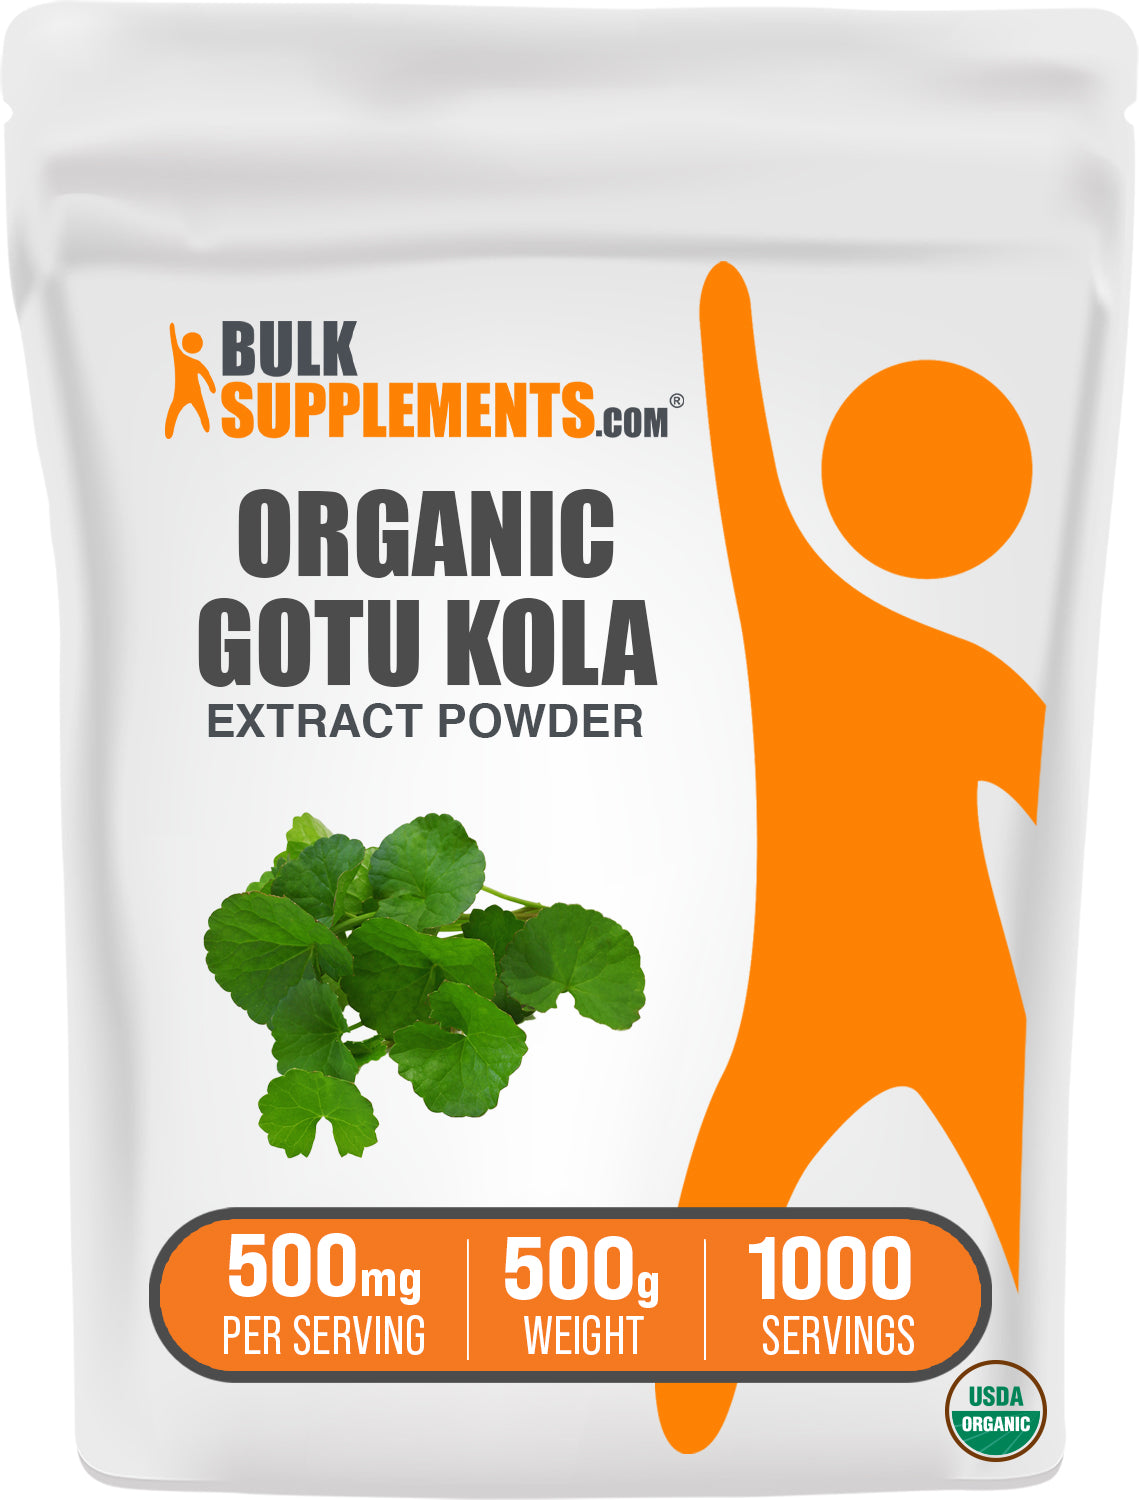 BulkSupplements.com organic gotu kola extract powder 500g bag